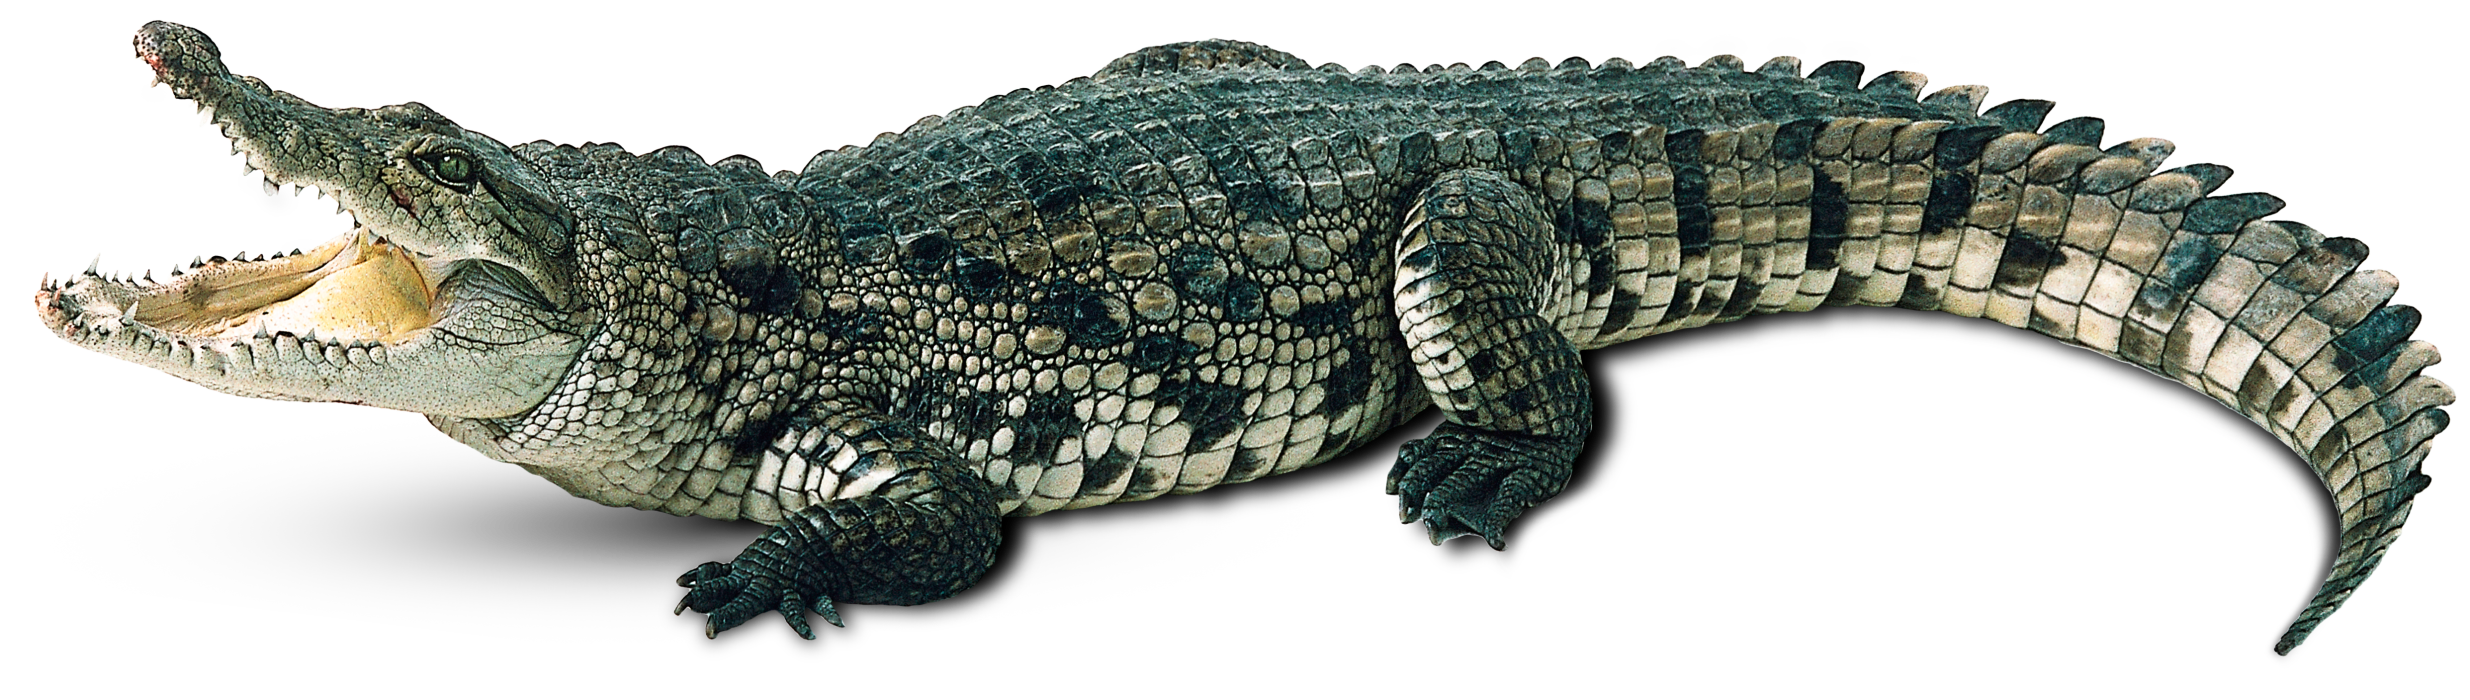 Crocodile Free Png Image PNG Image